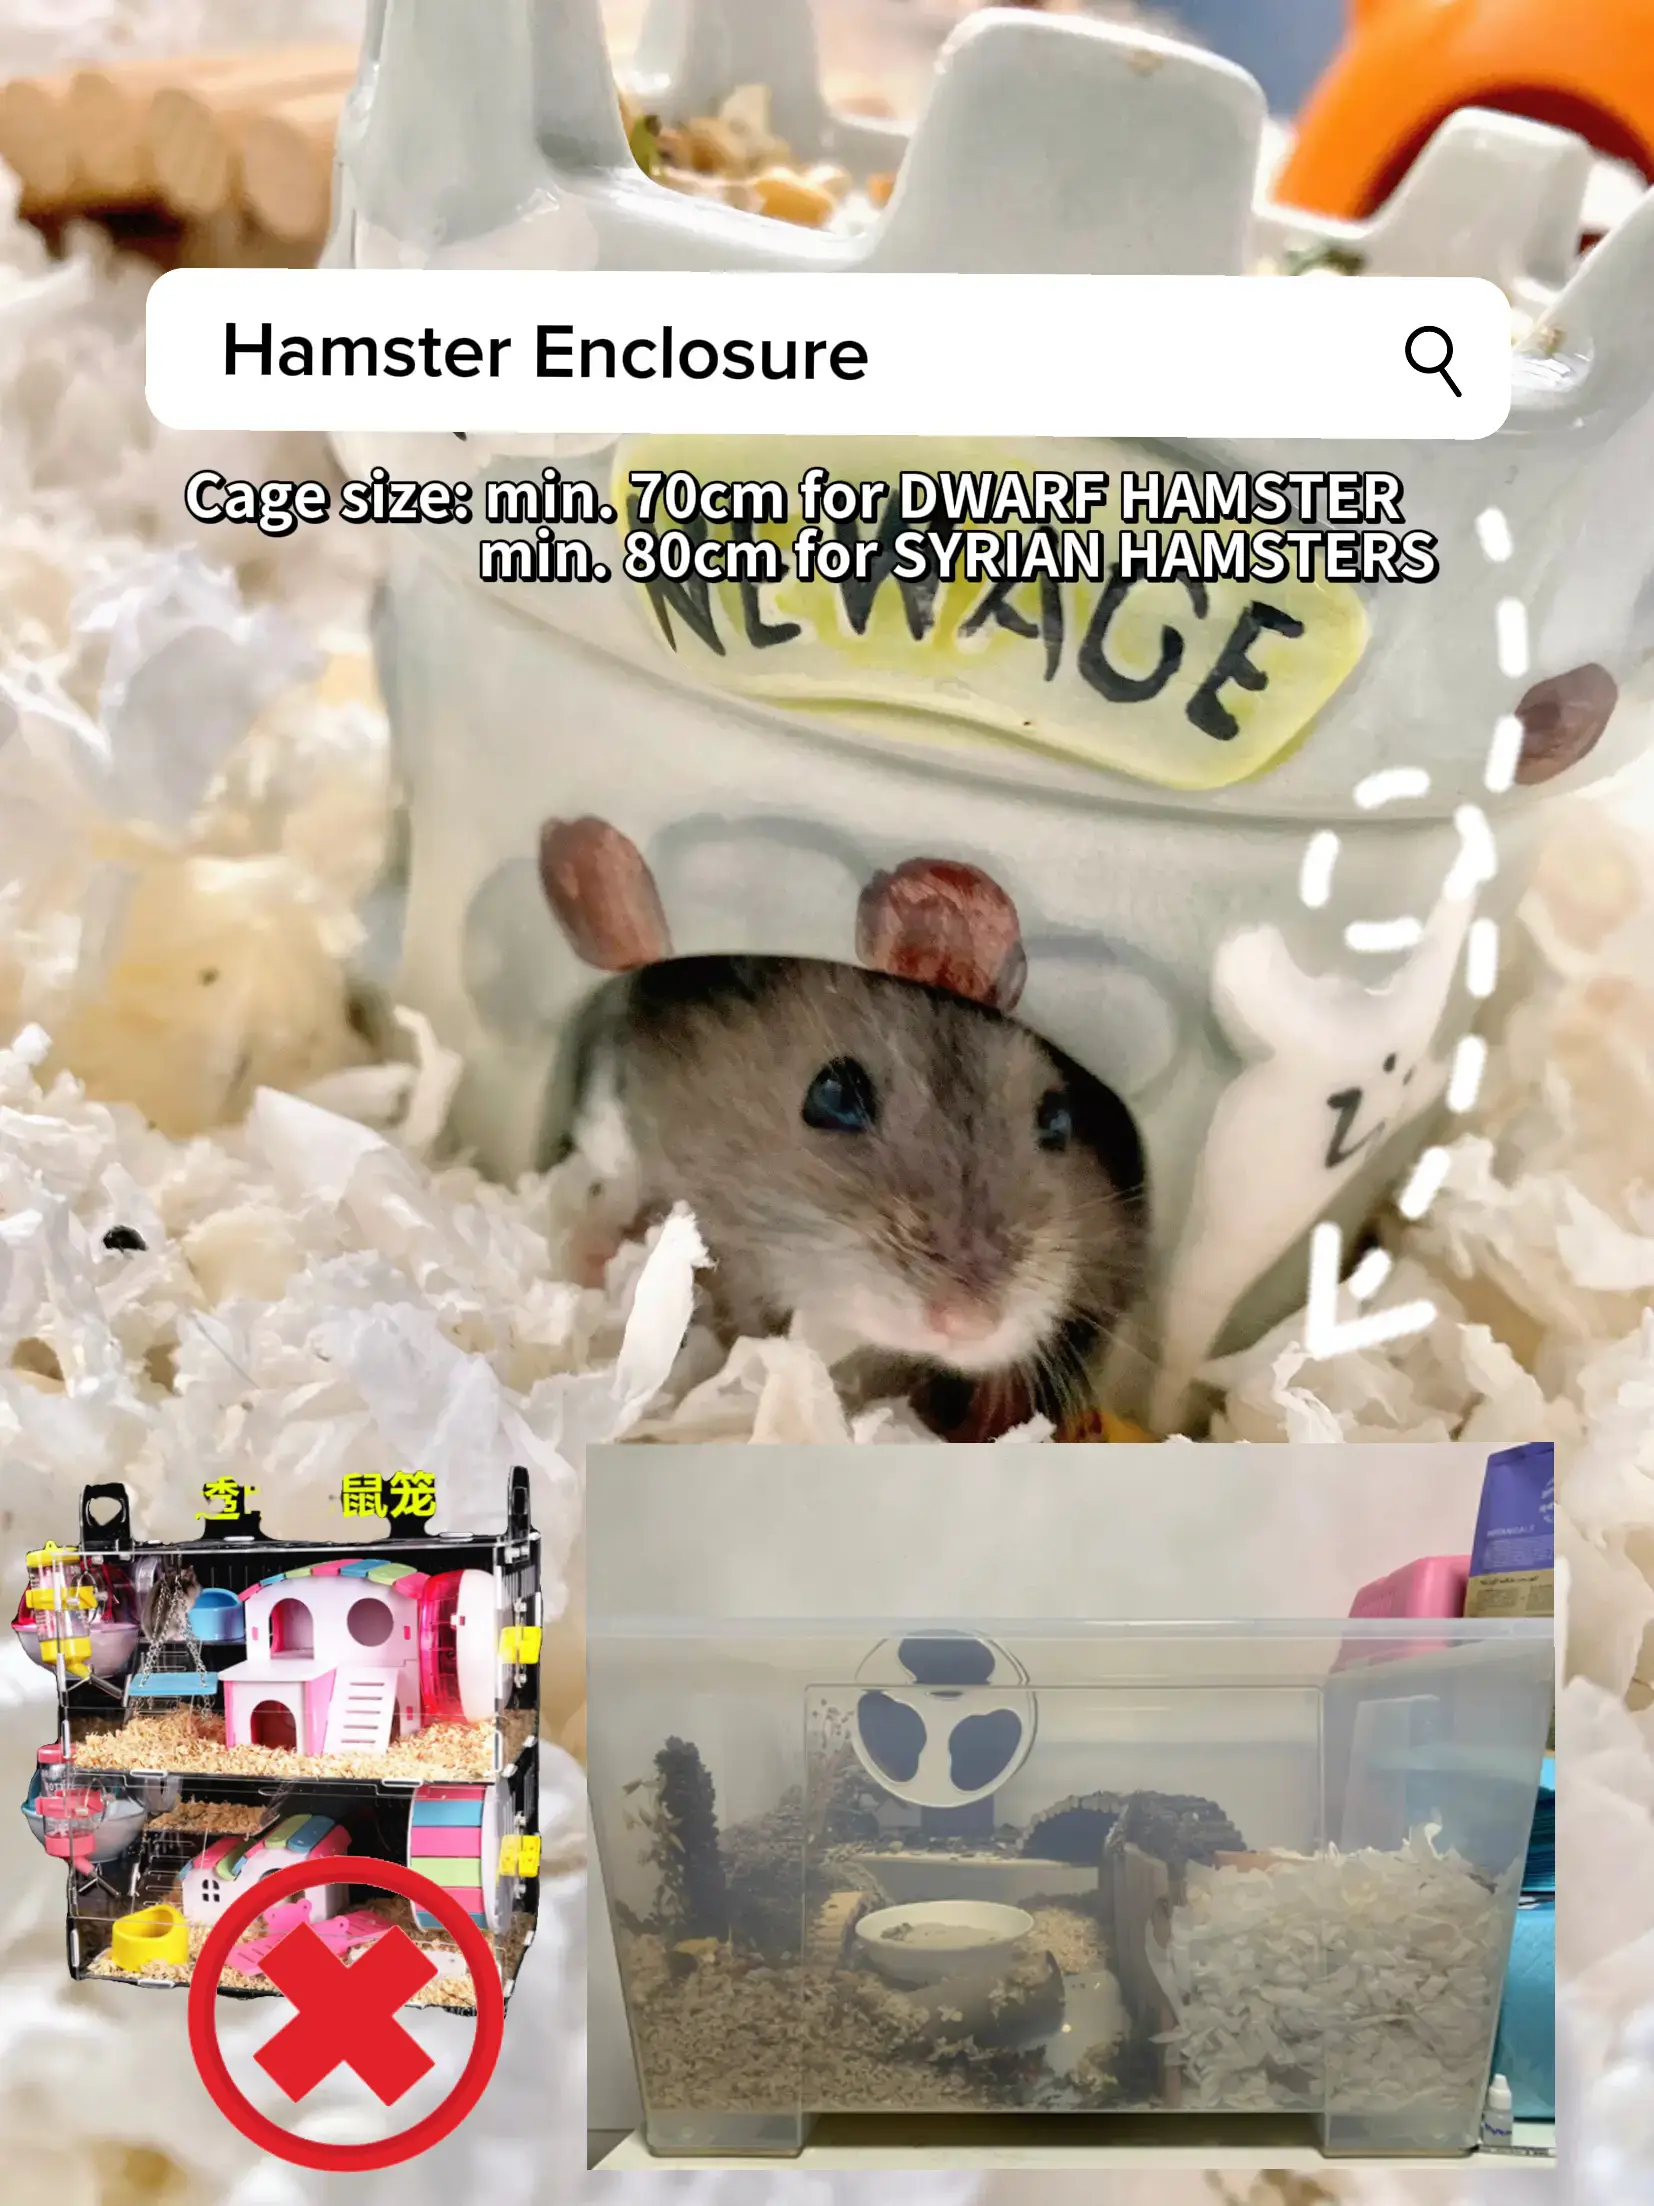 Hamster Health & Welfare Tips